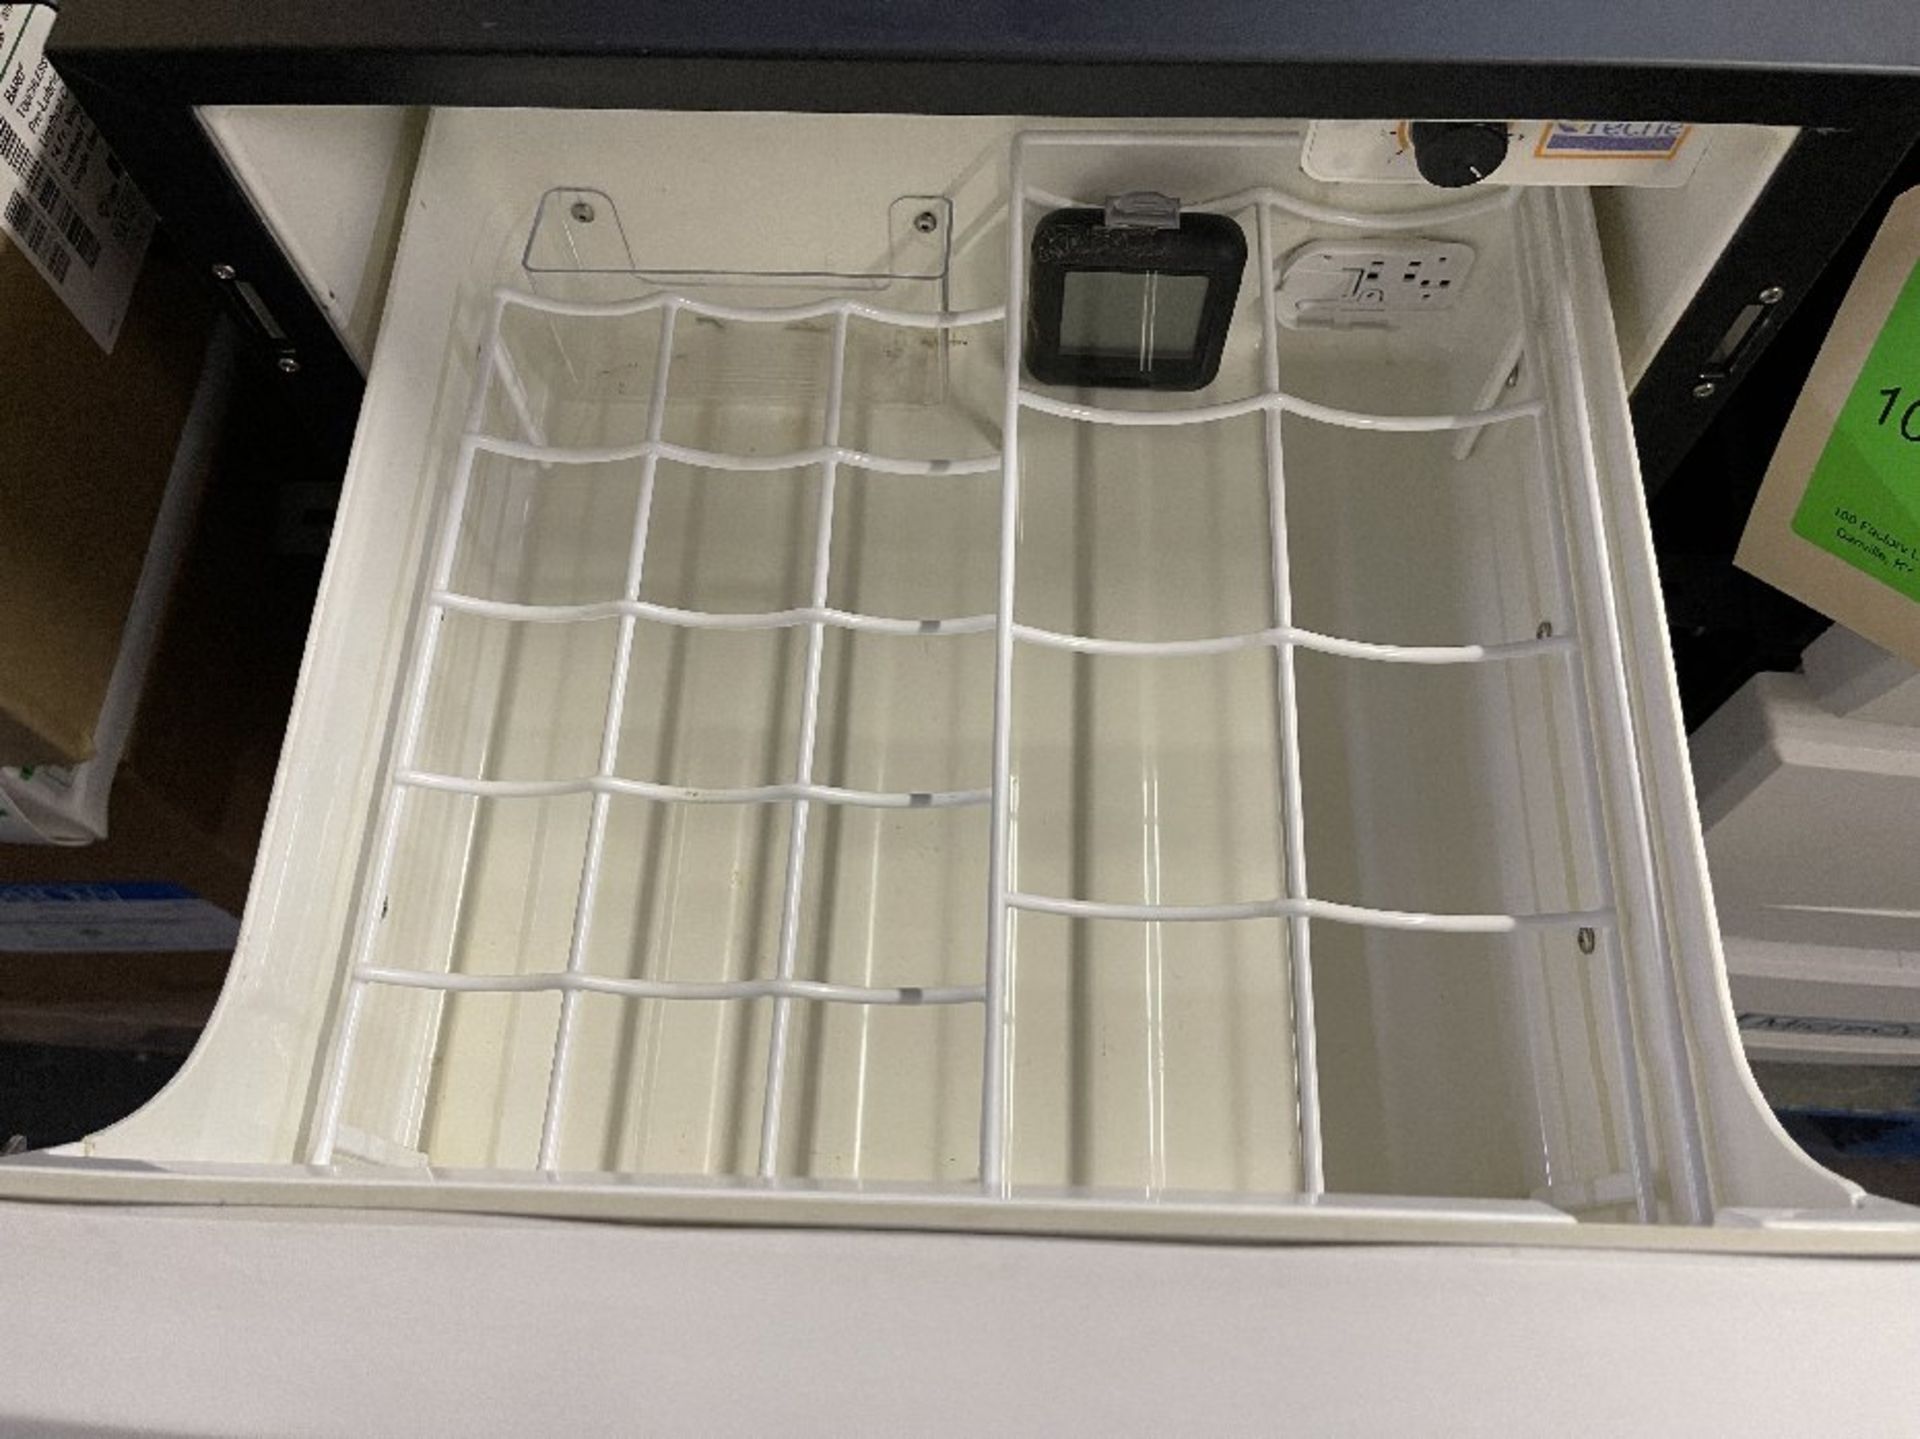 Creche Innovations MicroCool Refrigerators - Image 3 of 3